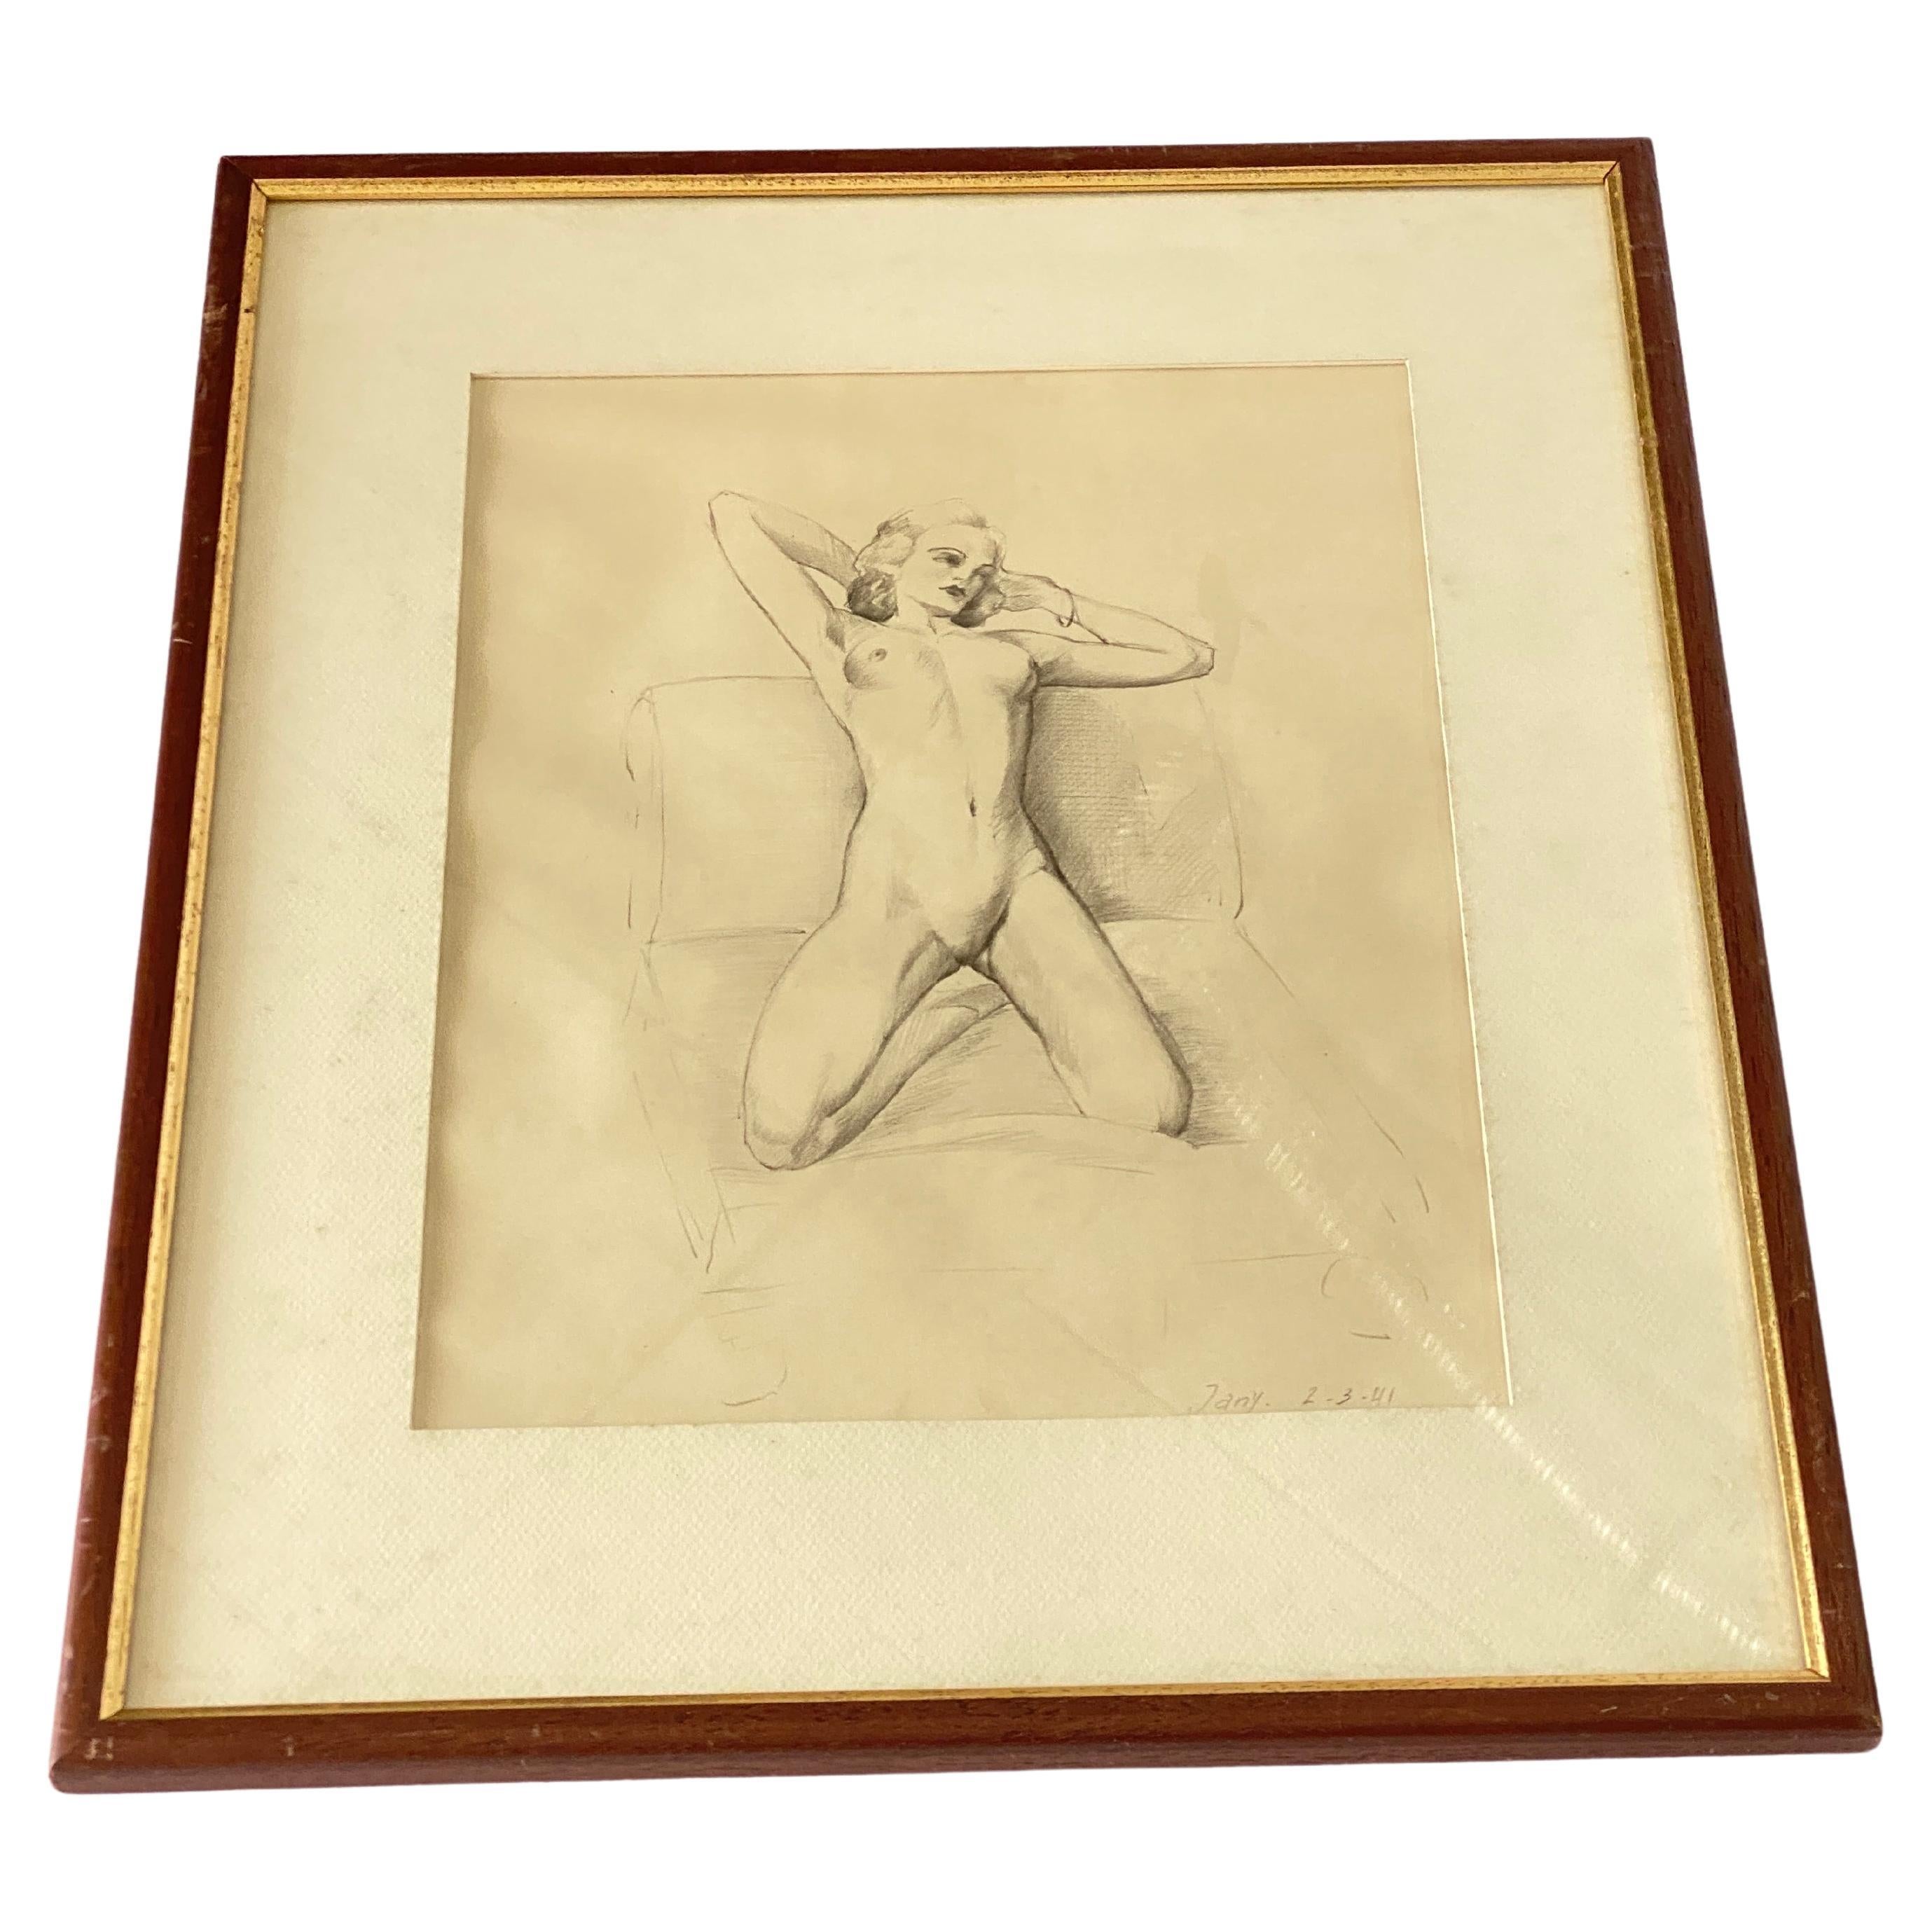  Art Deco Drawing Representing Nude Woman by Van Doren 'Raymond' Belgium 1941 For Sale